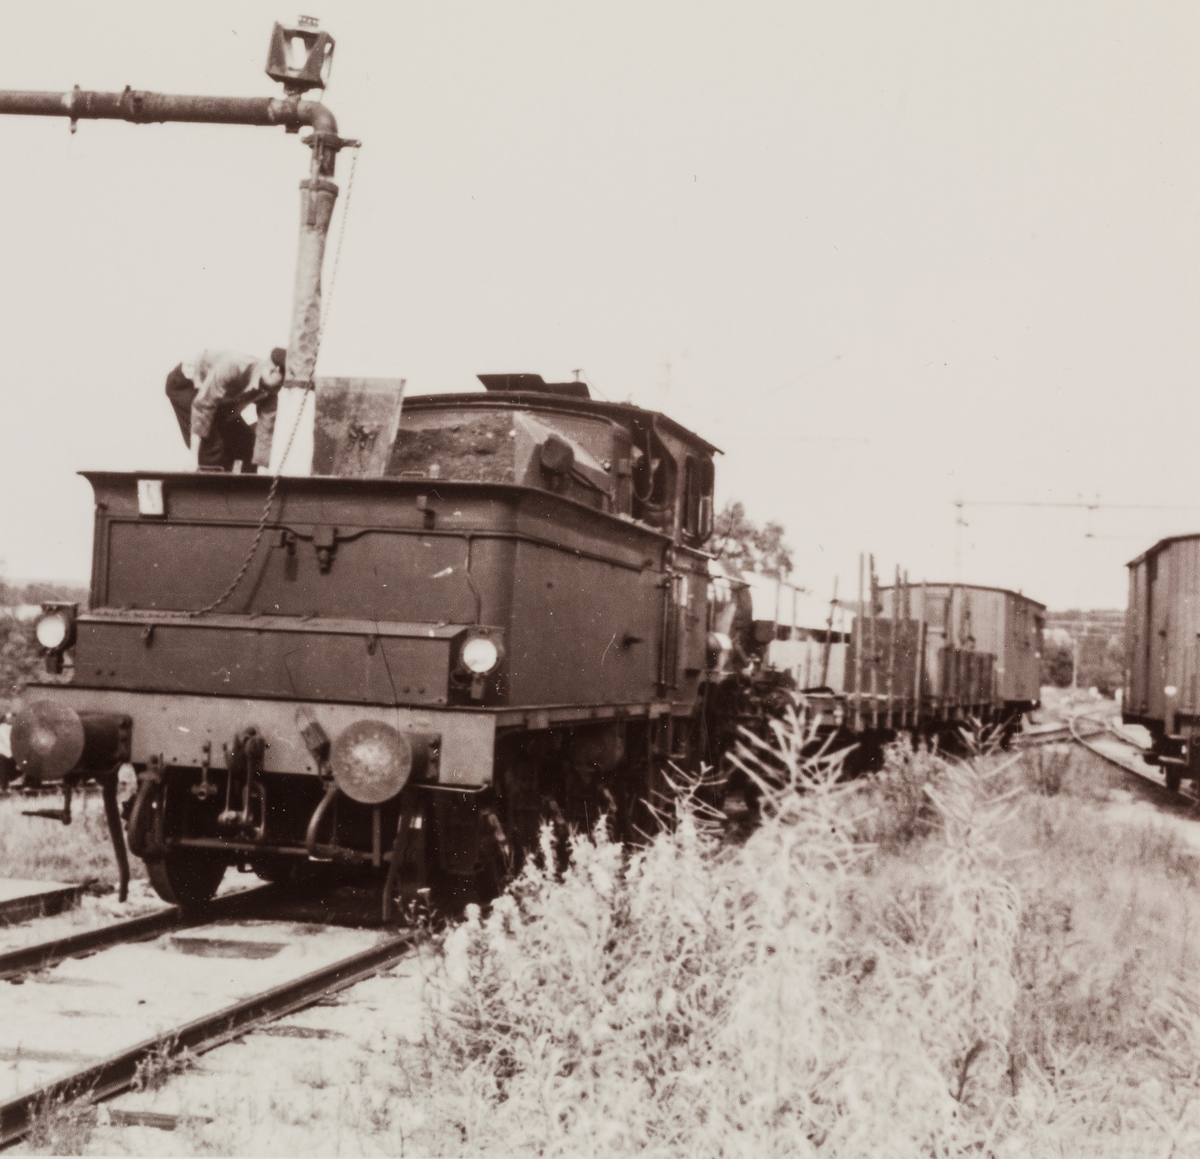 Vannfylling på damplokomotiv type 21 på Skotterud stasjon. Toget trafikkerer Vestmarkalinjen, Skotterud-Vestmarka.